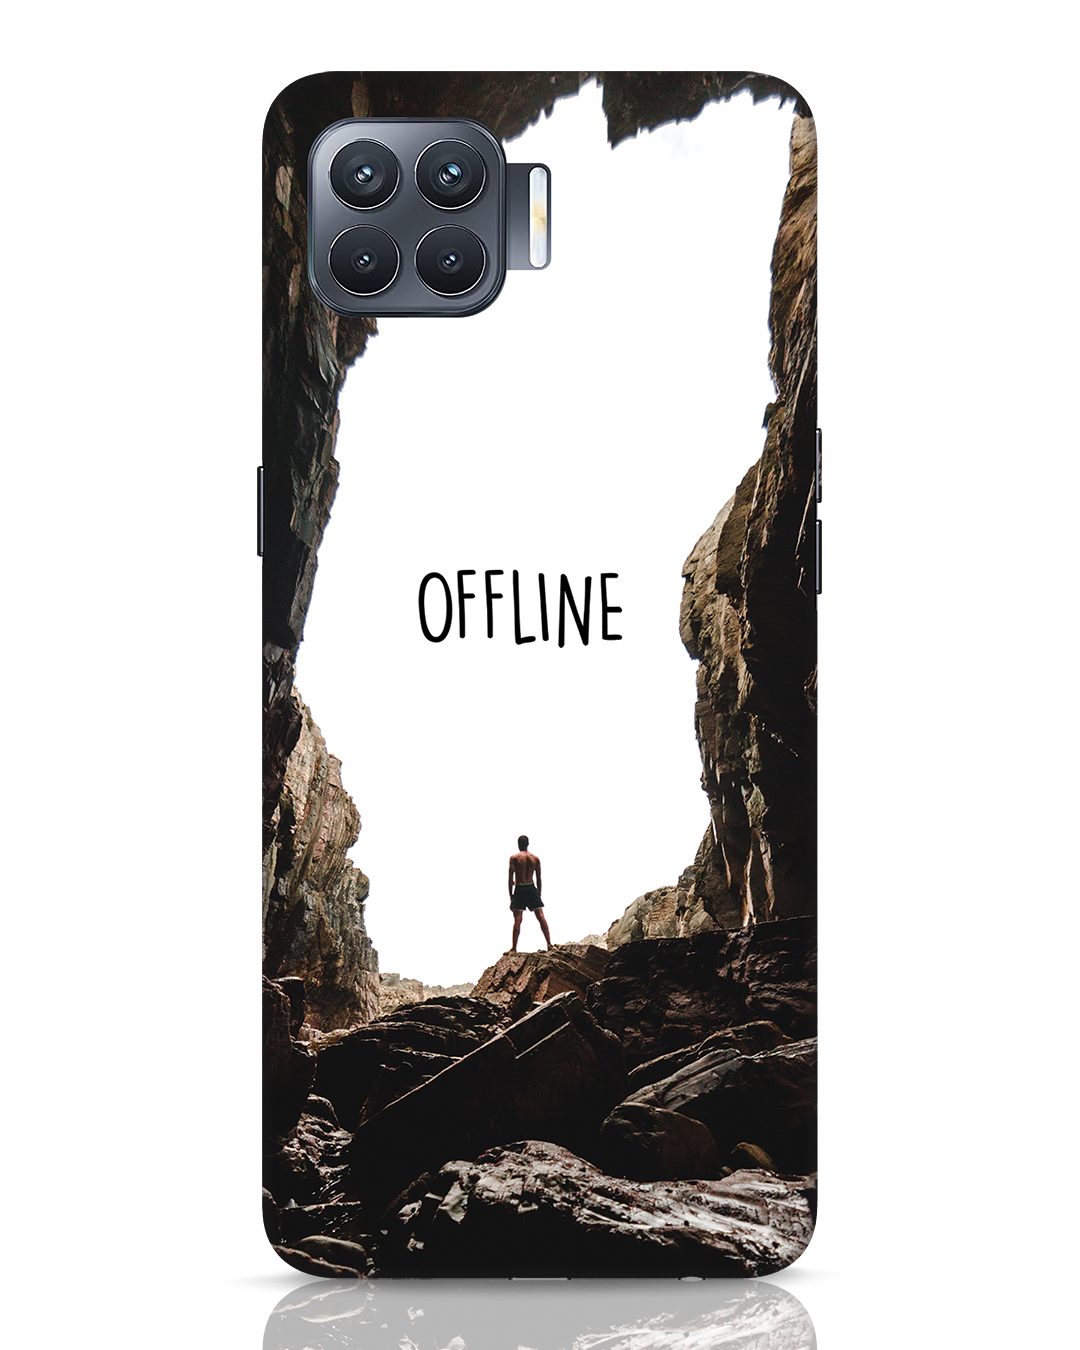 Buy Offline Oppo F17 Pro Mobile Cover Online in India at Bewakoof